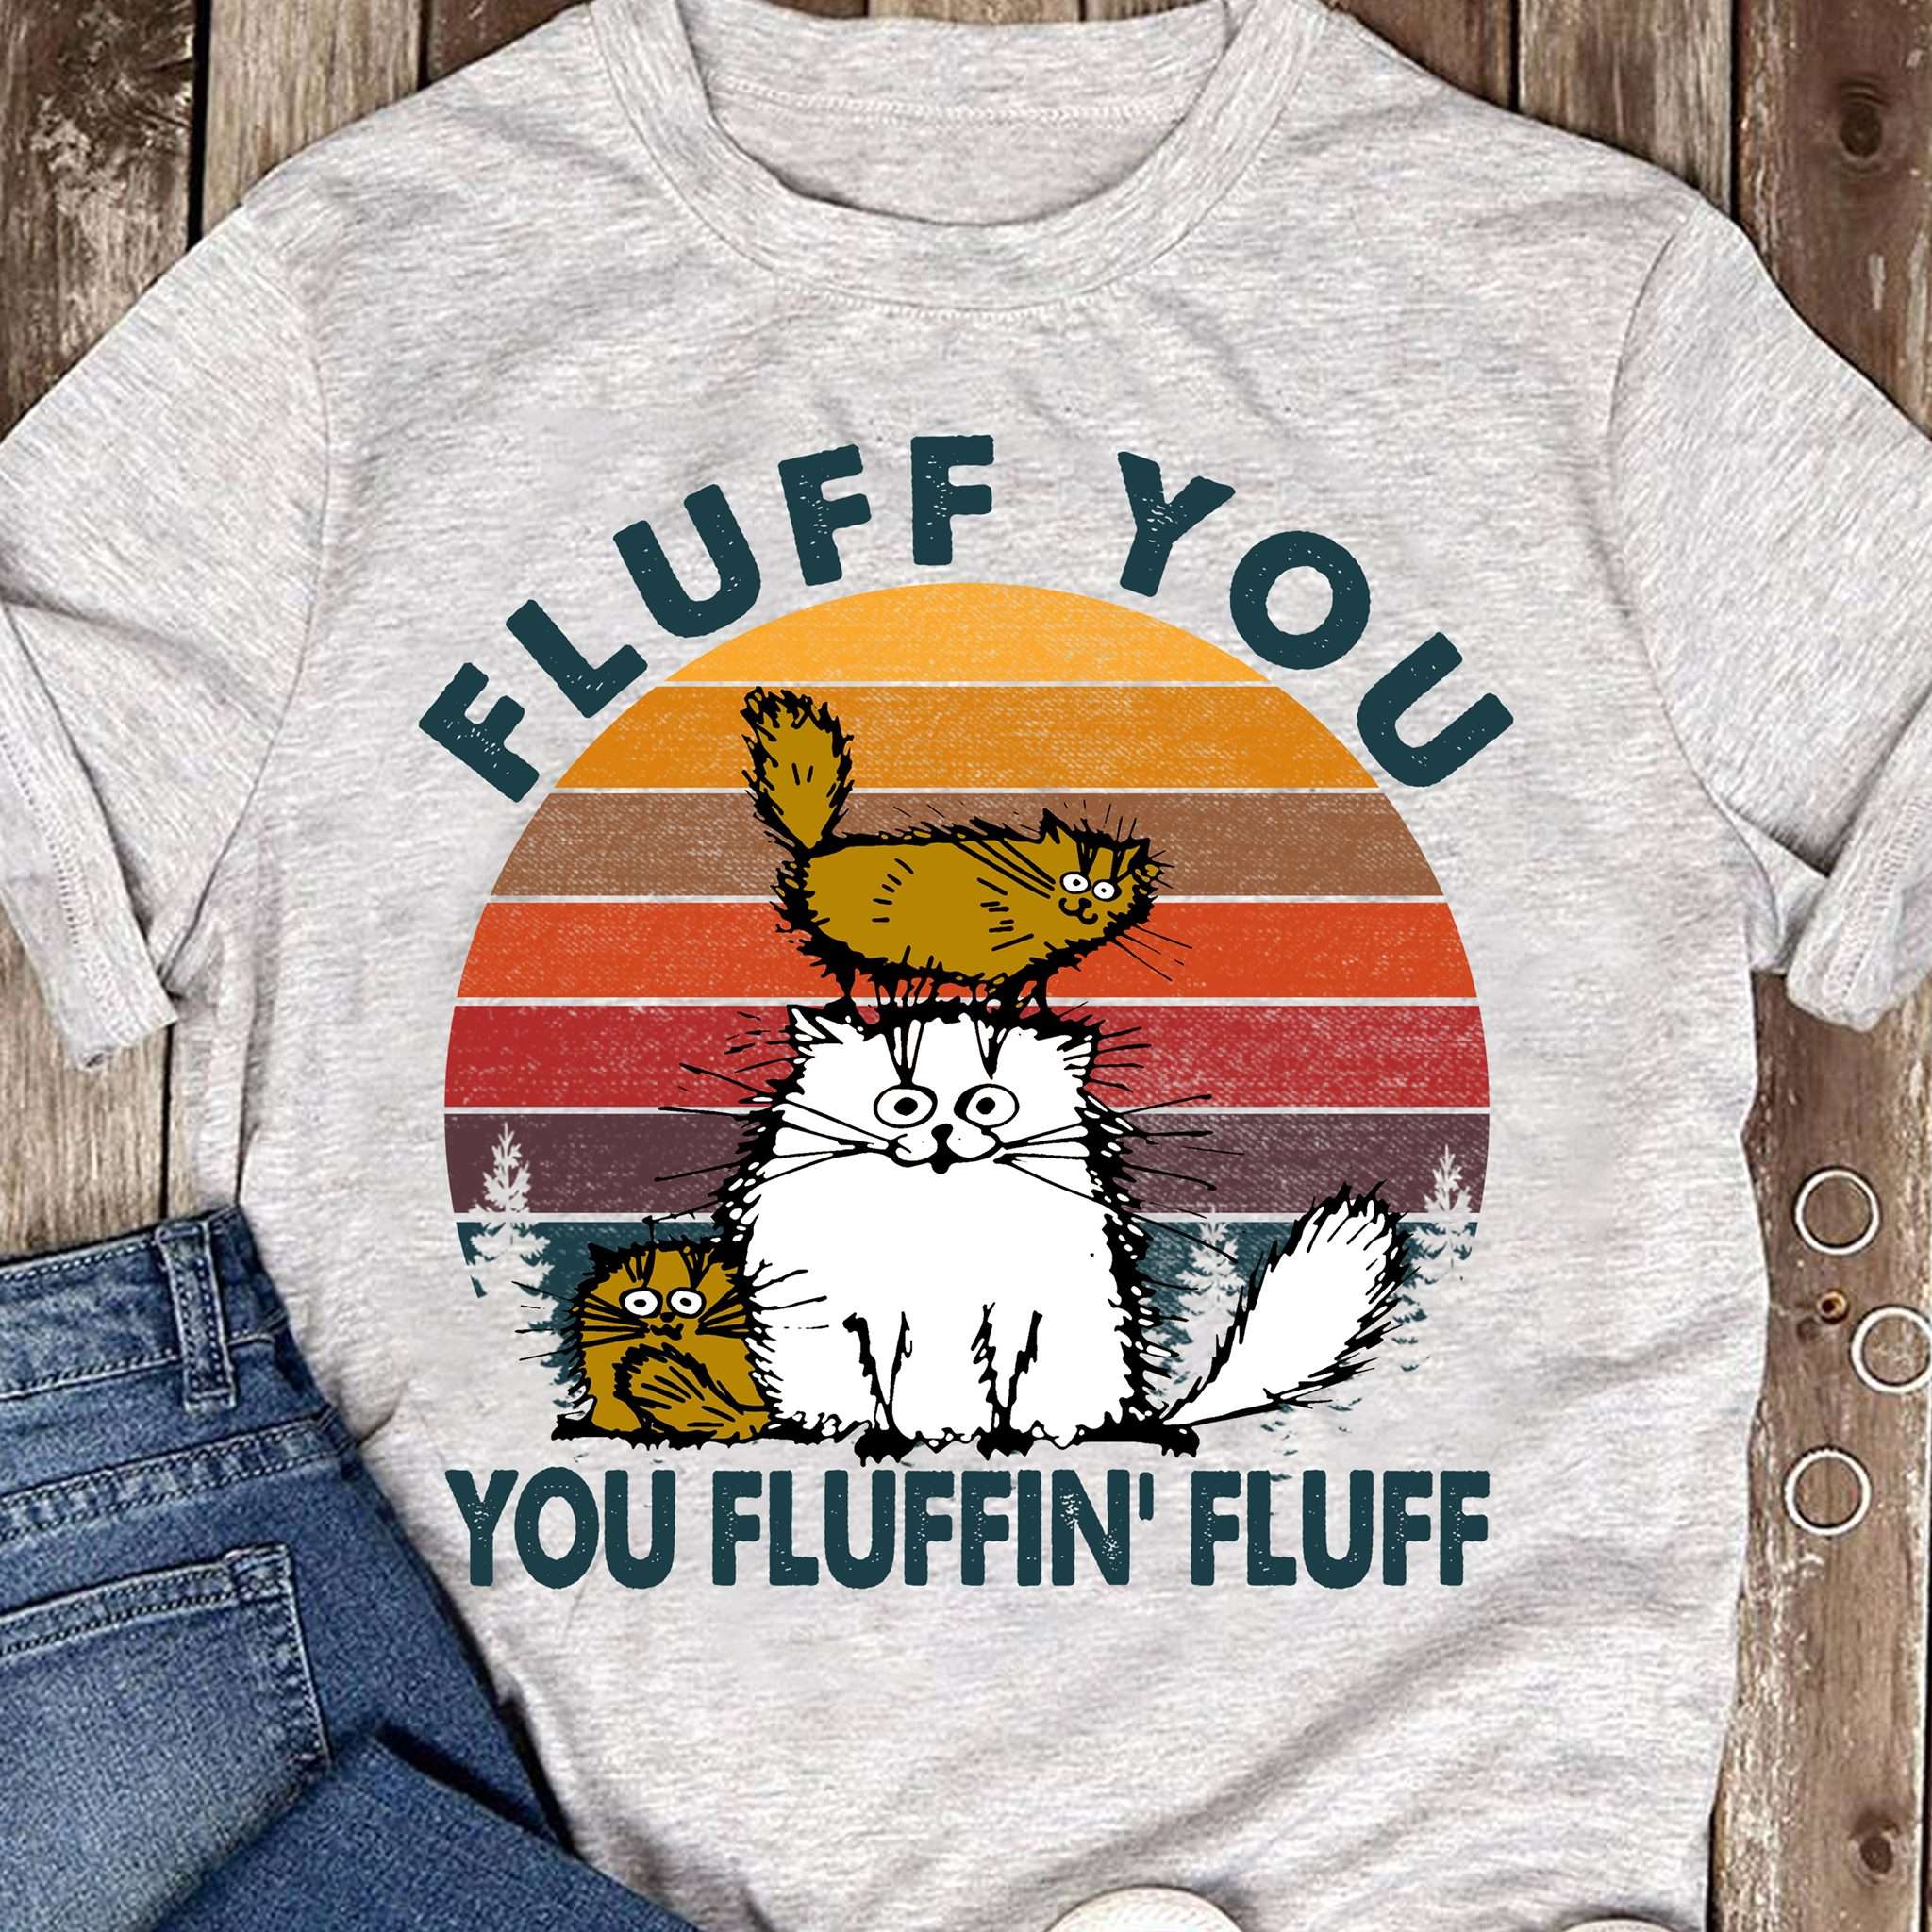 Fluffy Cats - Fluff you you fluffin' fluff